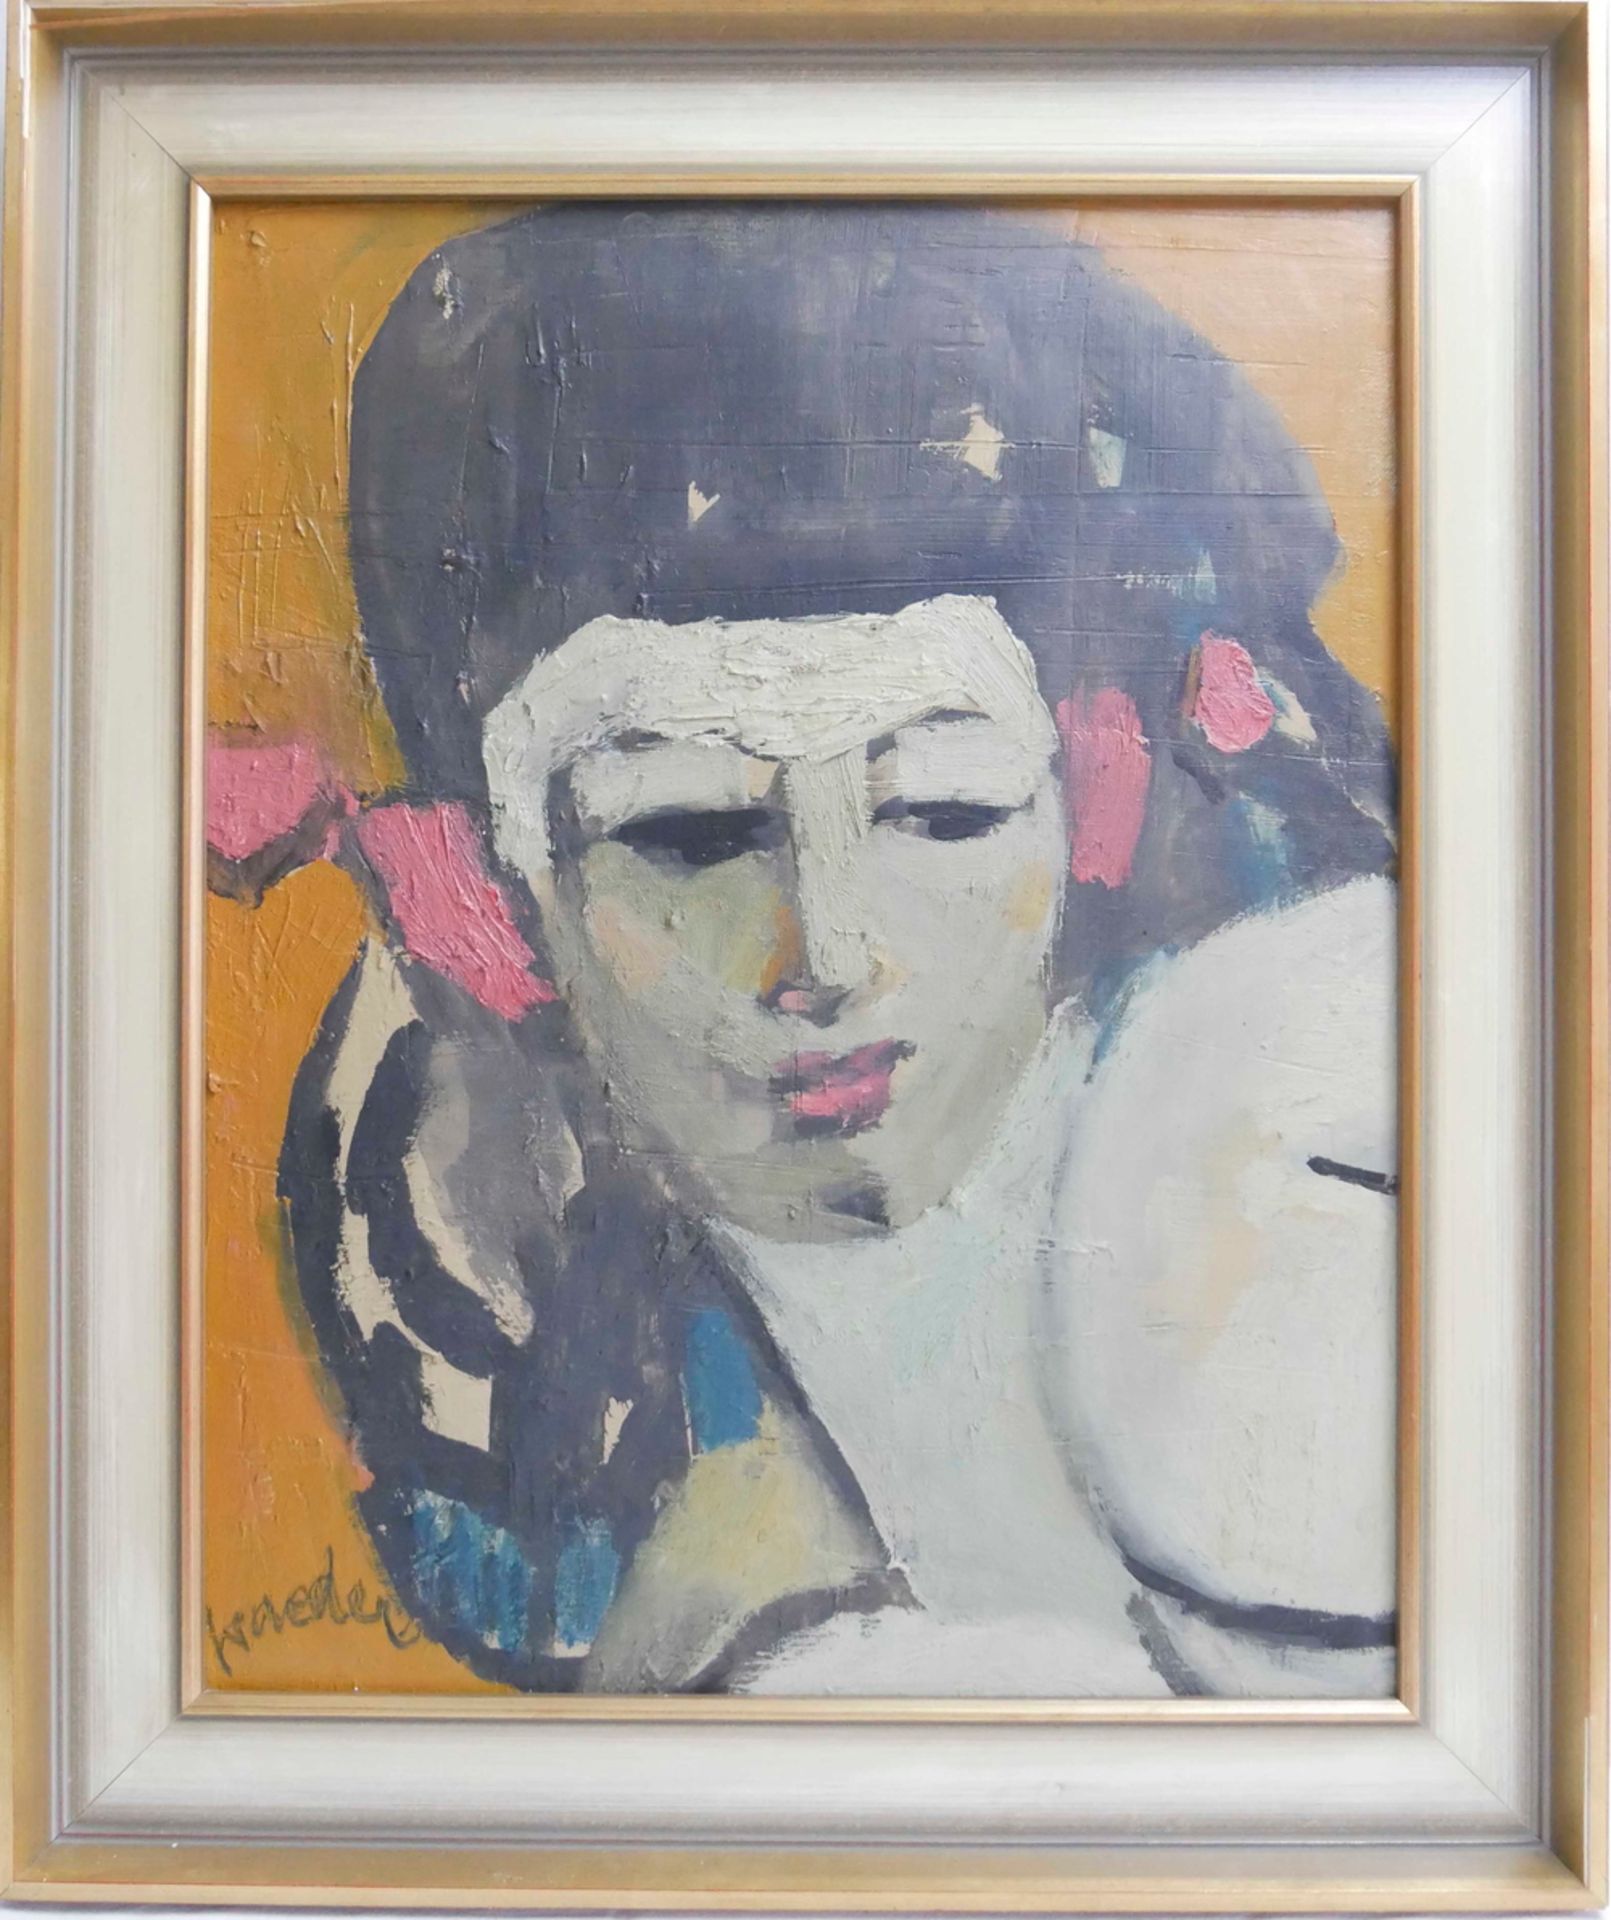 wohl Thomas Traeder (1958- ) Ölgemälde auf Leinwand "Art Deco Dame" links unten Signatur Traeder,